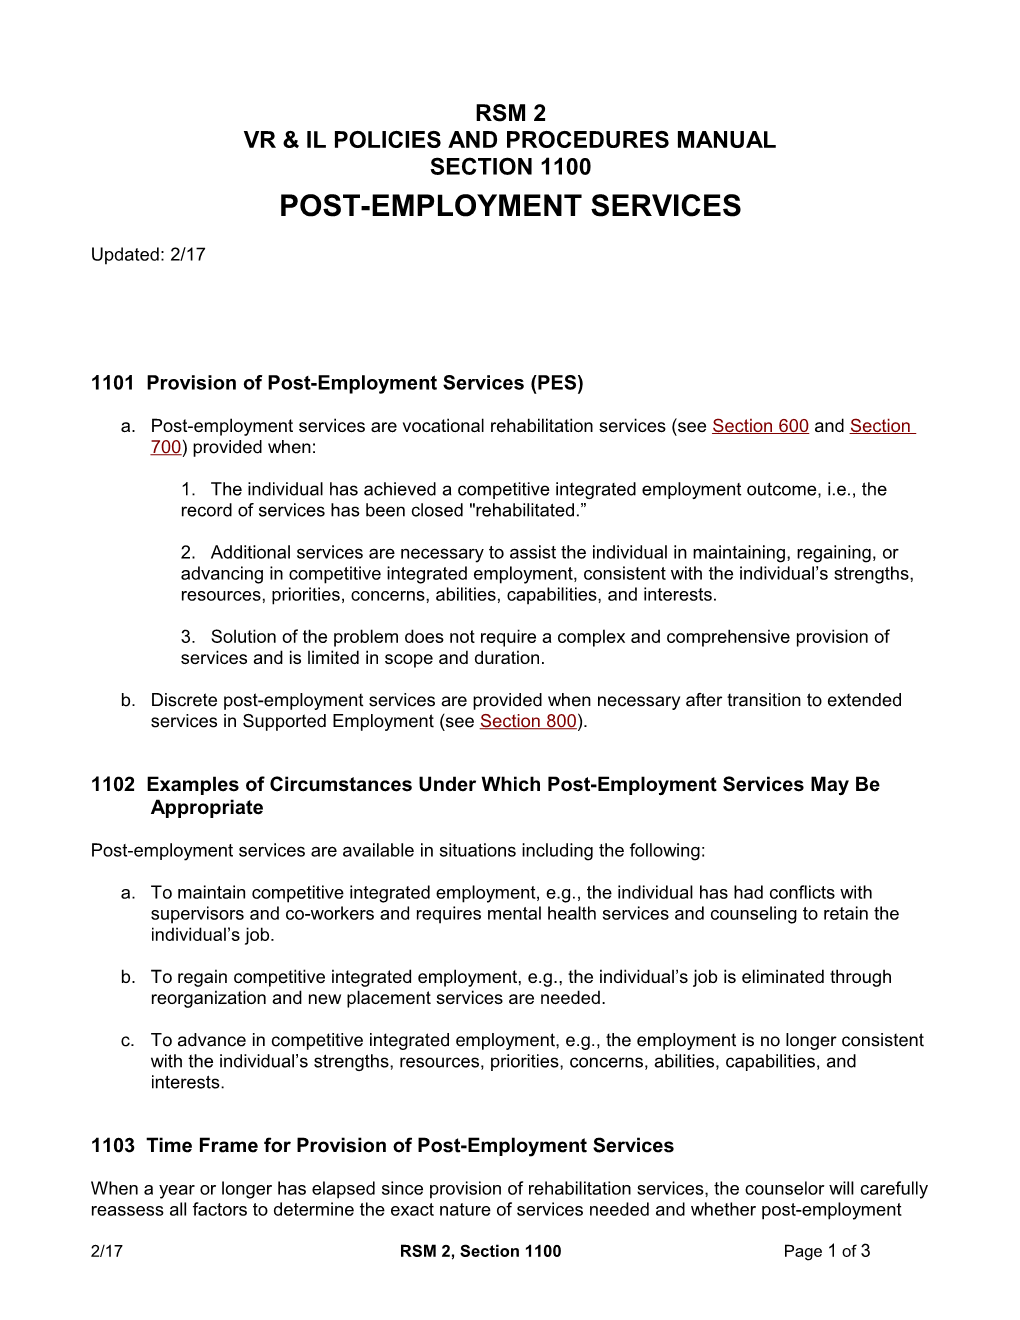 RSM 2, Section 1100: Post-Employment Services